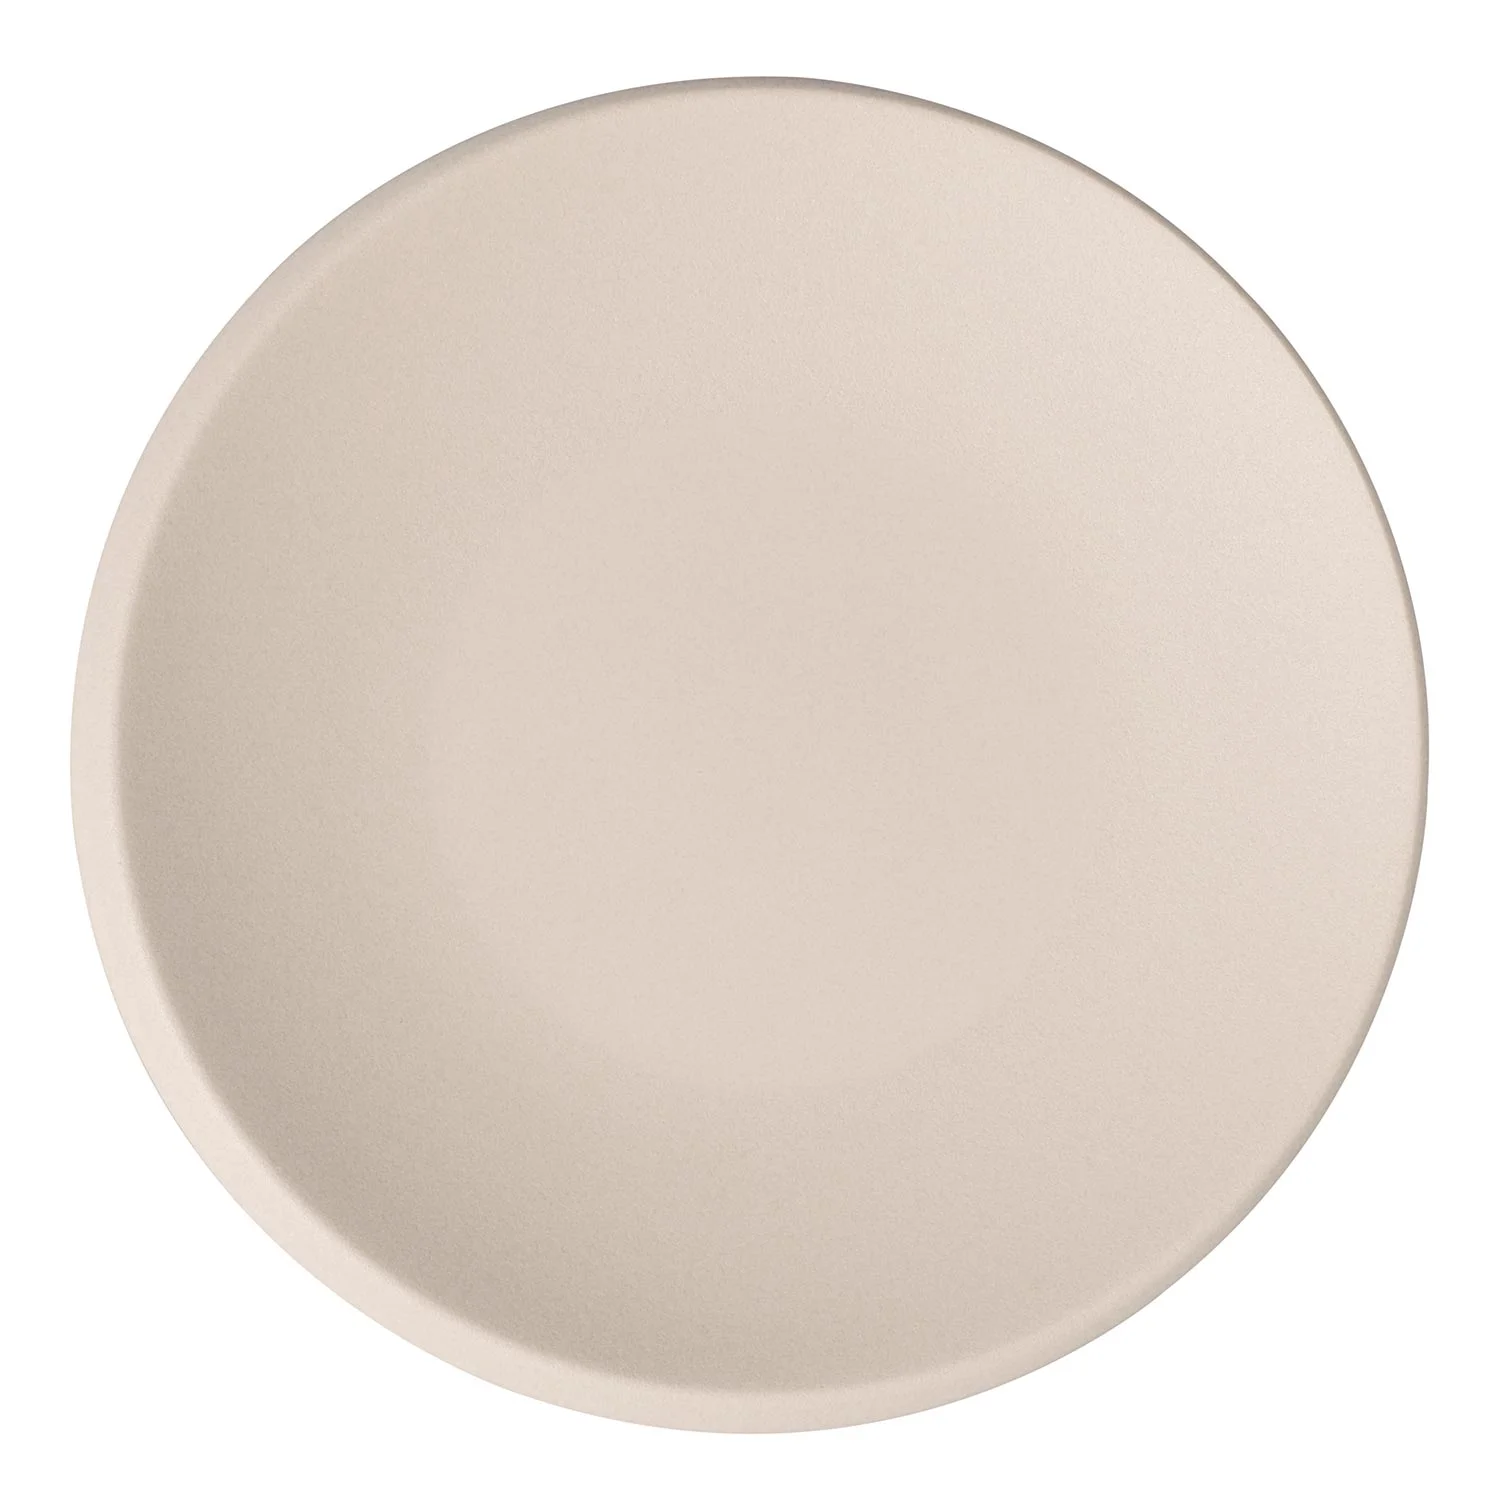 NewMoon beige Пирожковая тарелка 16 см